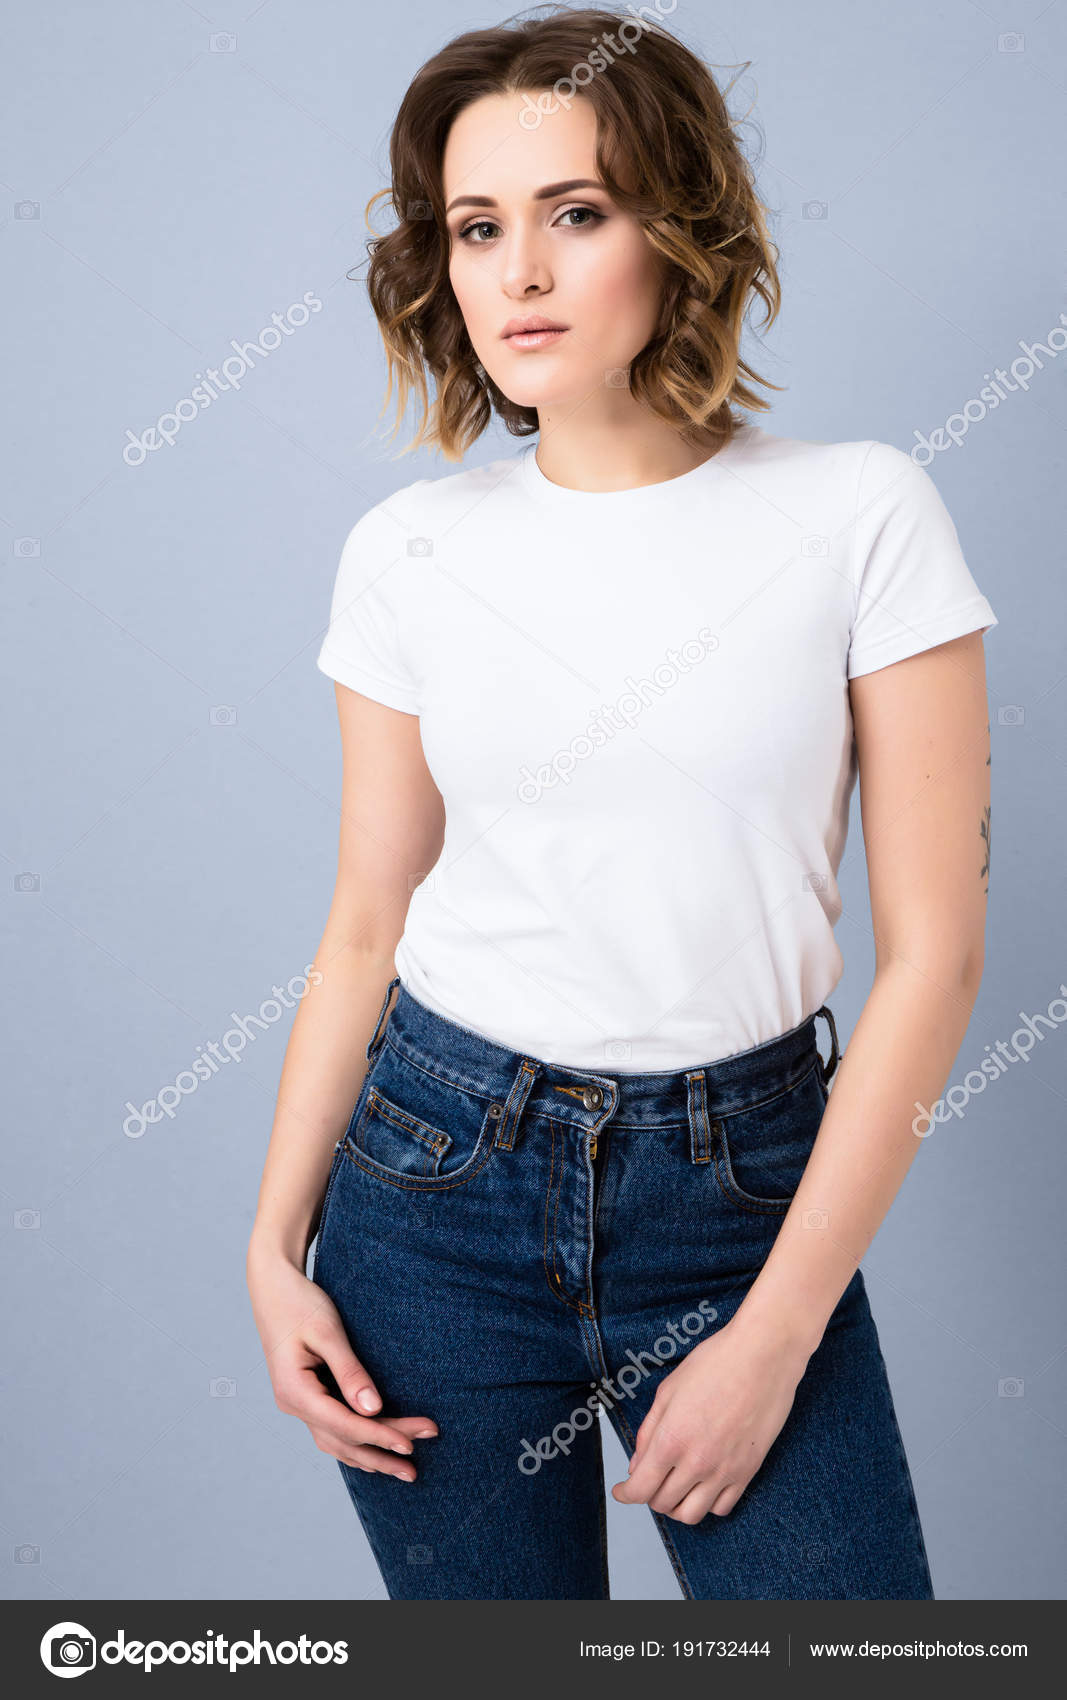 Young stylish beautiful woman wearing blue shirt, blue denim jeans